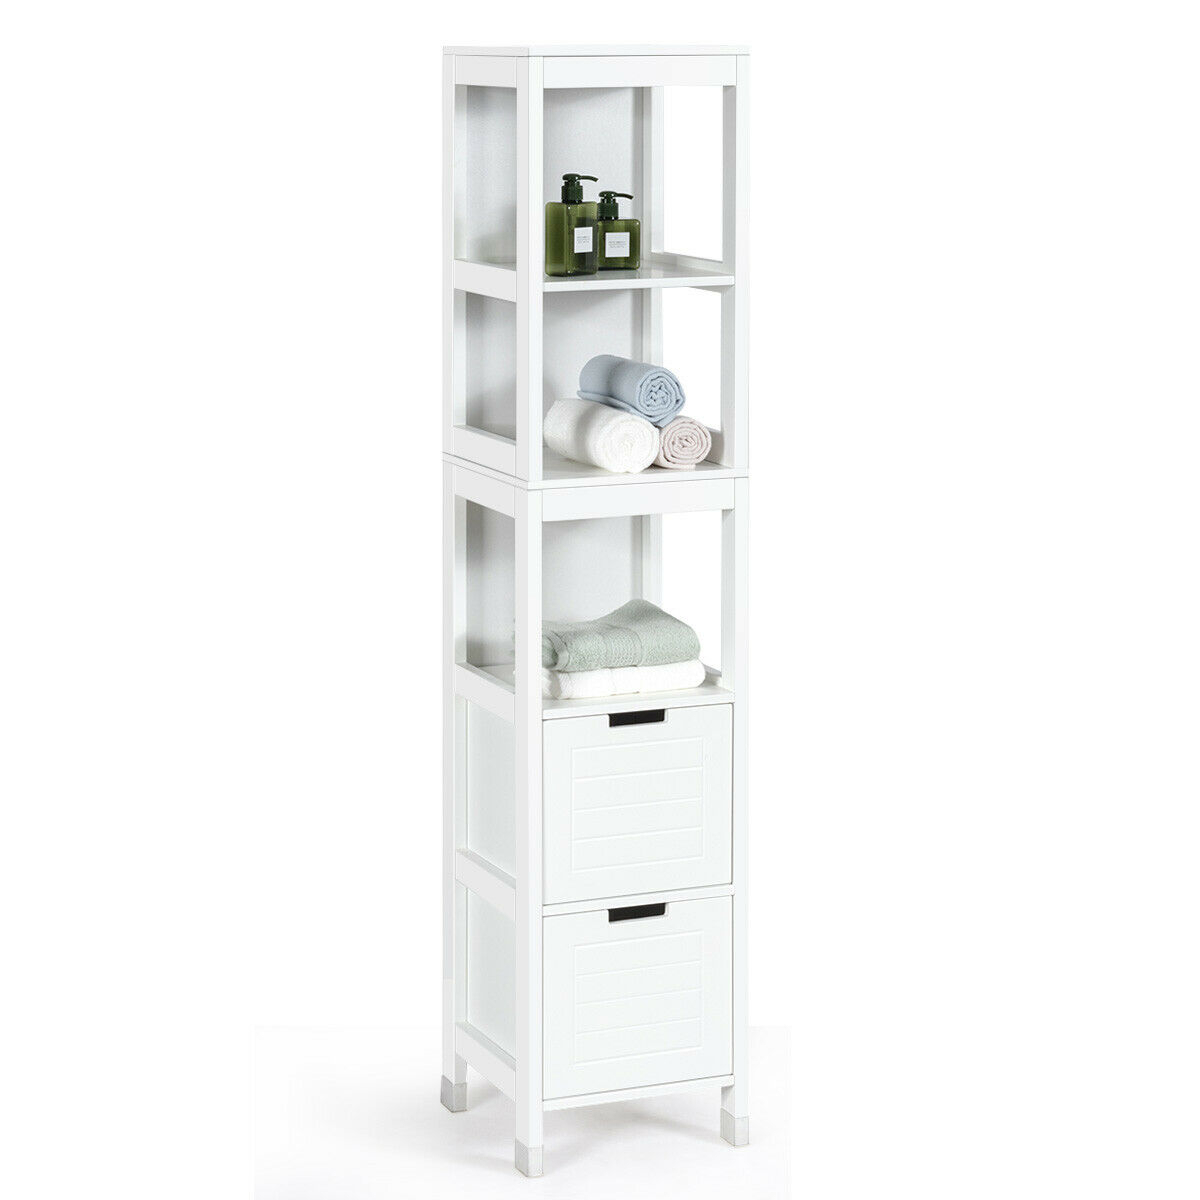 Bathroom Floor Cabinet Multifunctional Storage Organizer 5Tier Shelves&2 Drawers